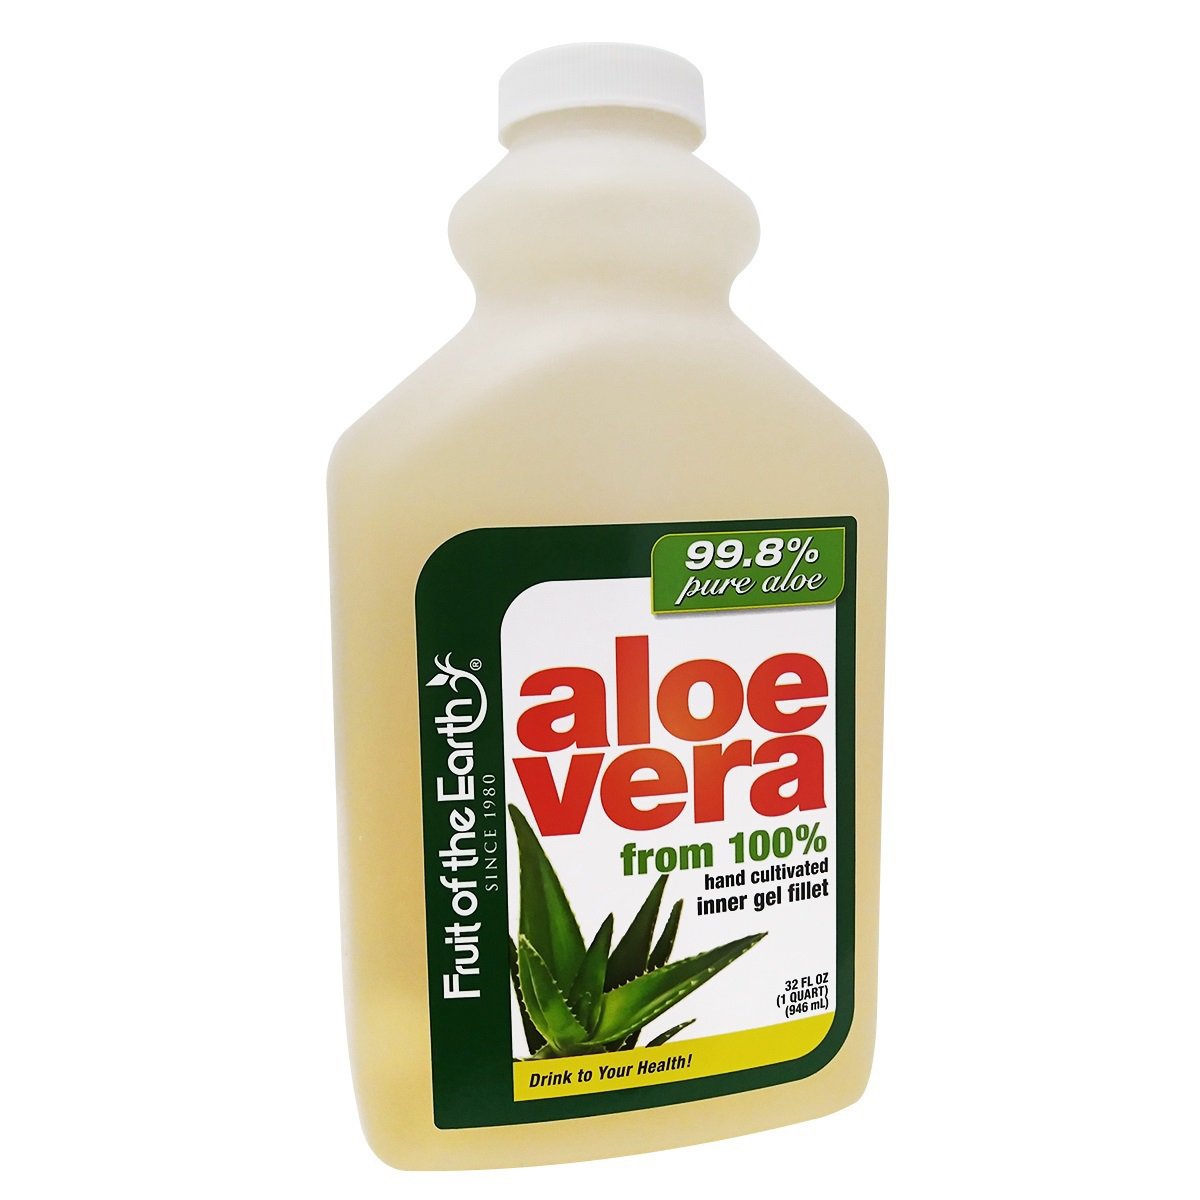 blozen Ontwapening Danser Fruit of the Earth 99.8% Aloe Vera Juice - Shop Herbs & Homeopathy at H-E-B